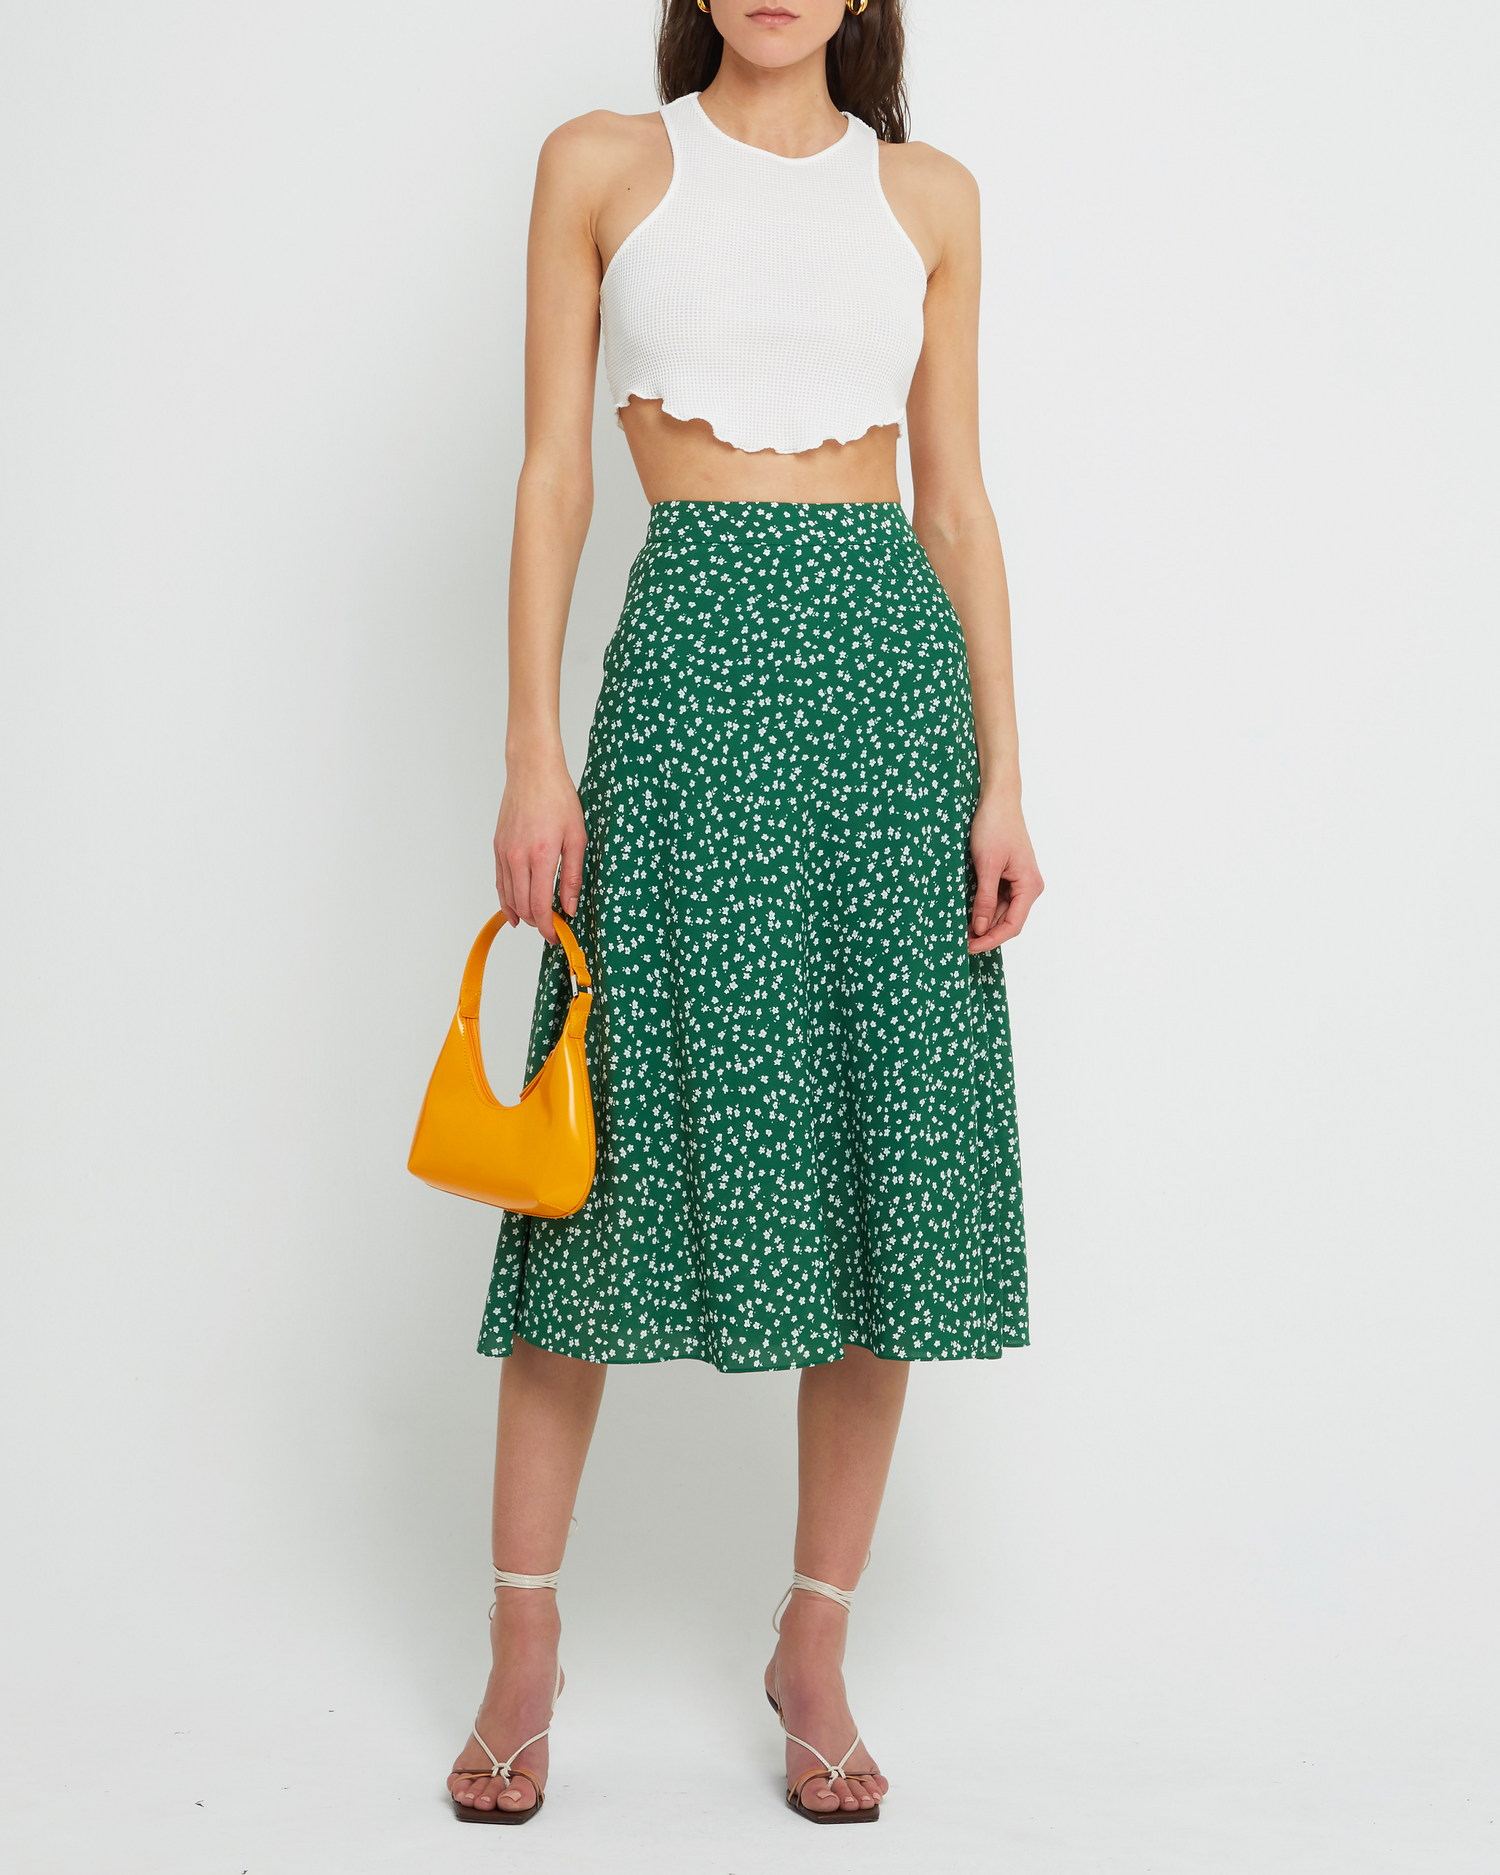 Fifth image of Rilynn Skirt, a green midi skirt, floral, back zipper